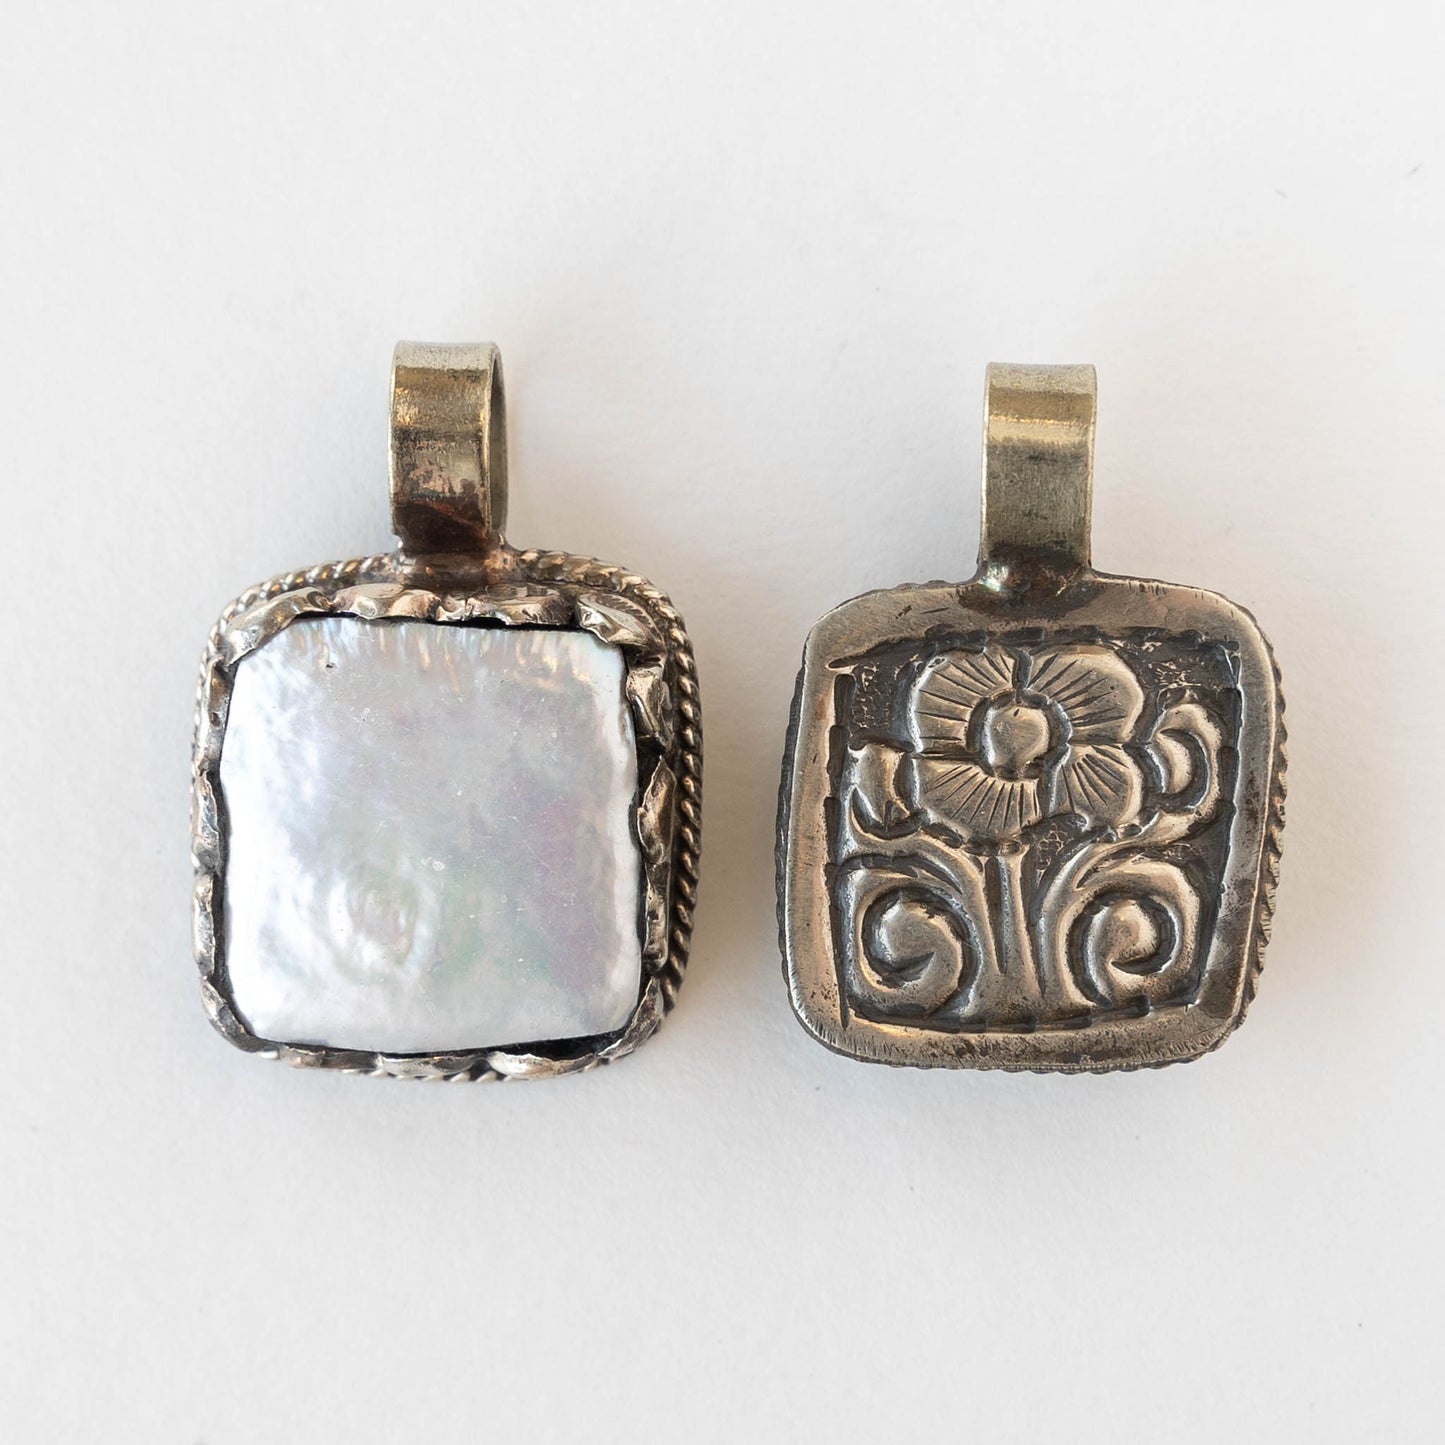 23mm Square Pearl Pendant Set In Tibetan Silver- 1 piece